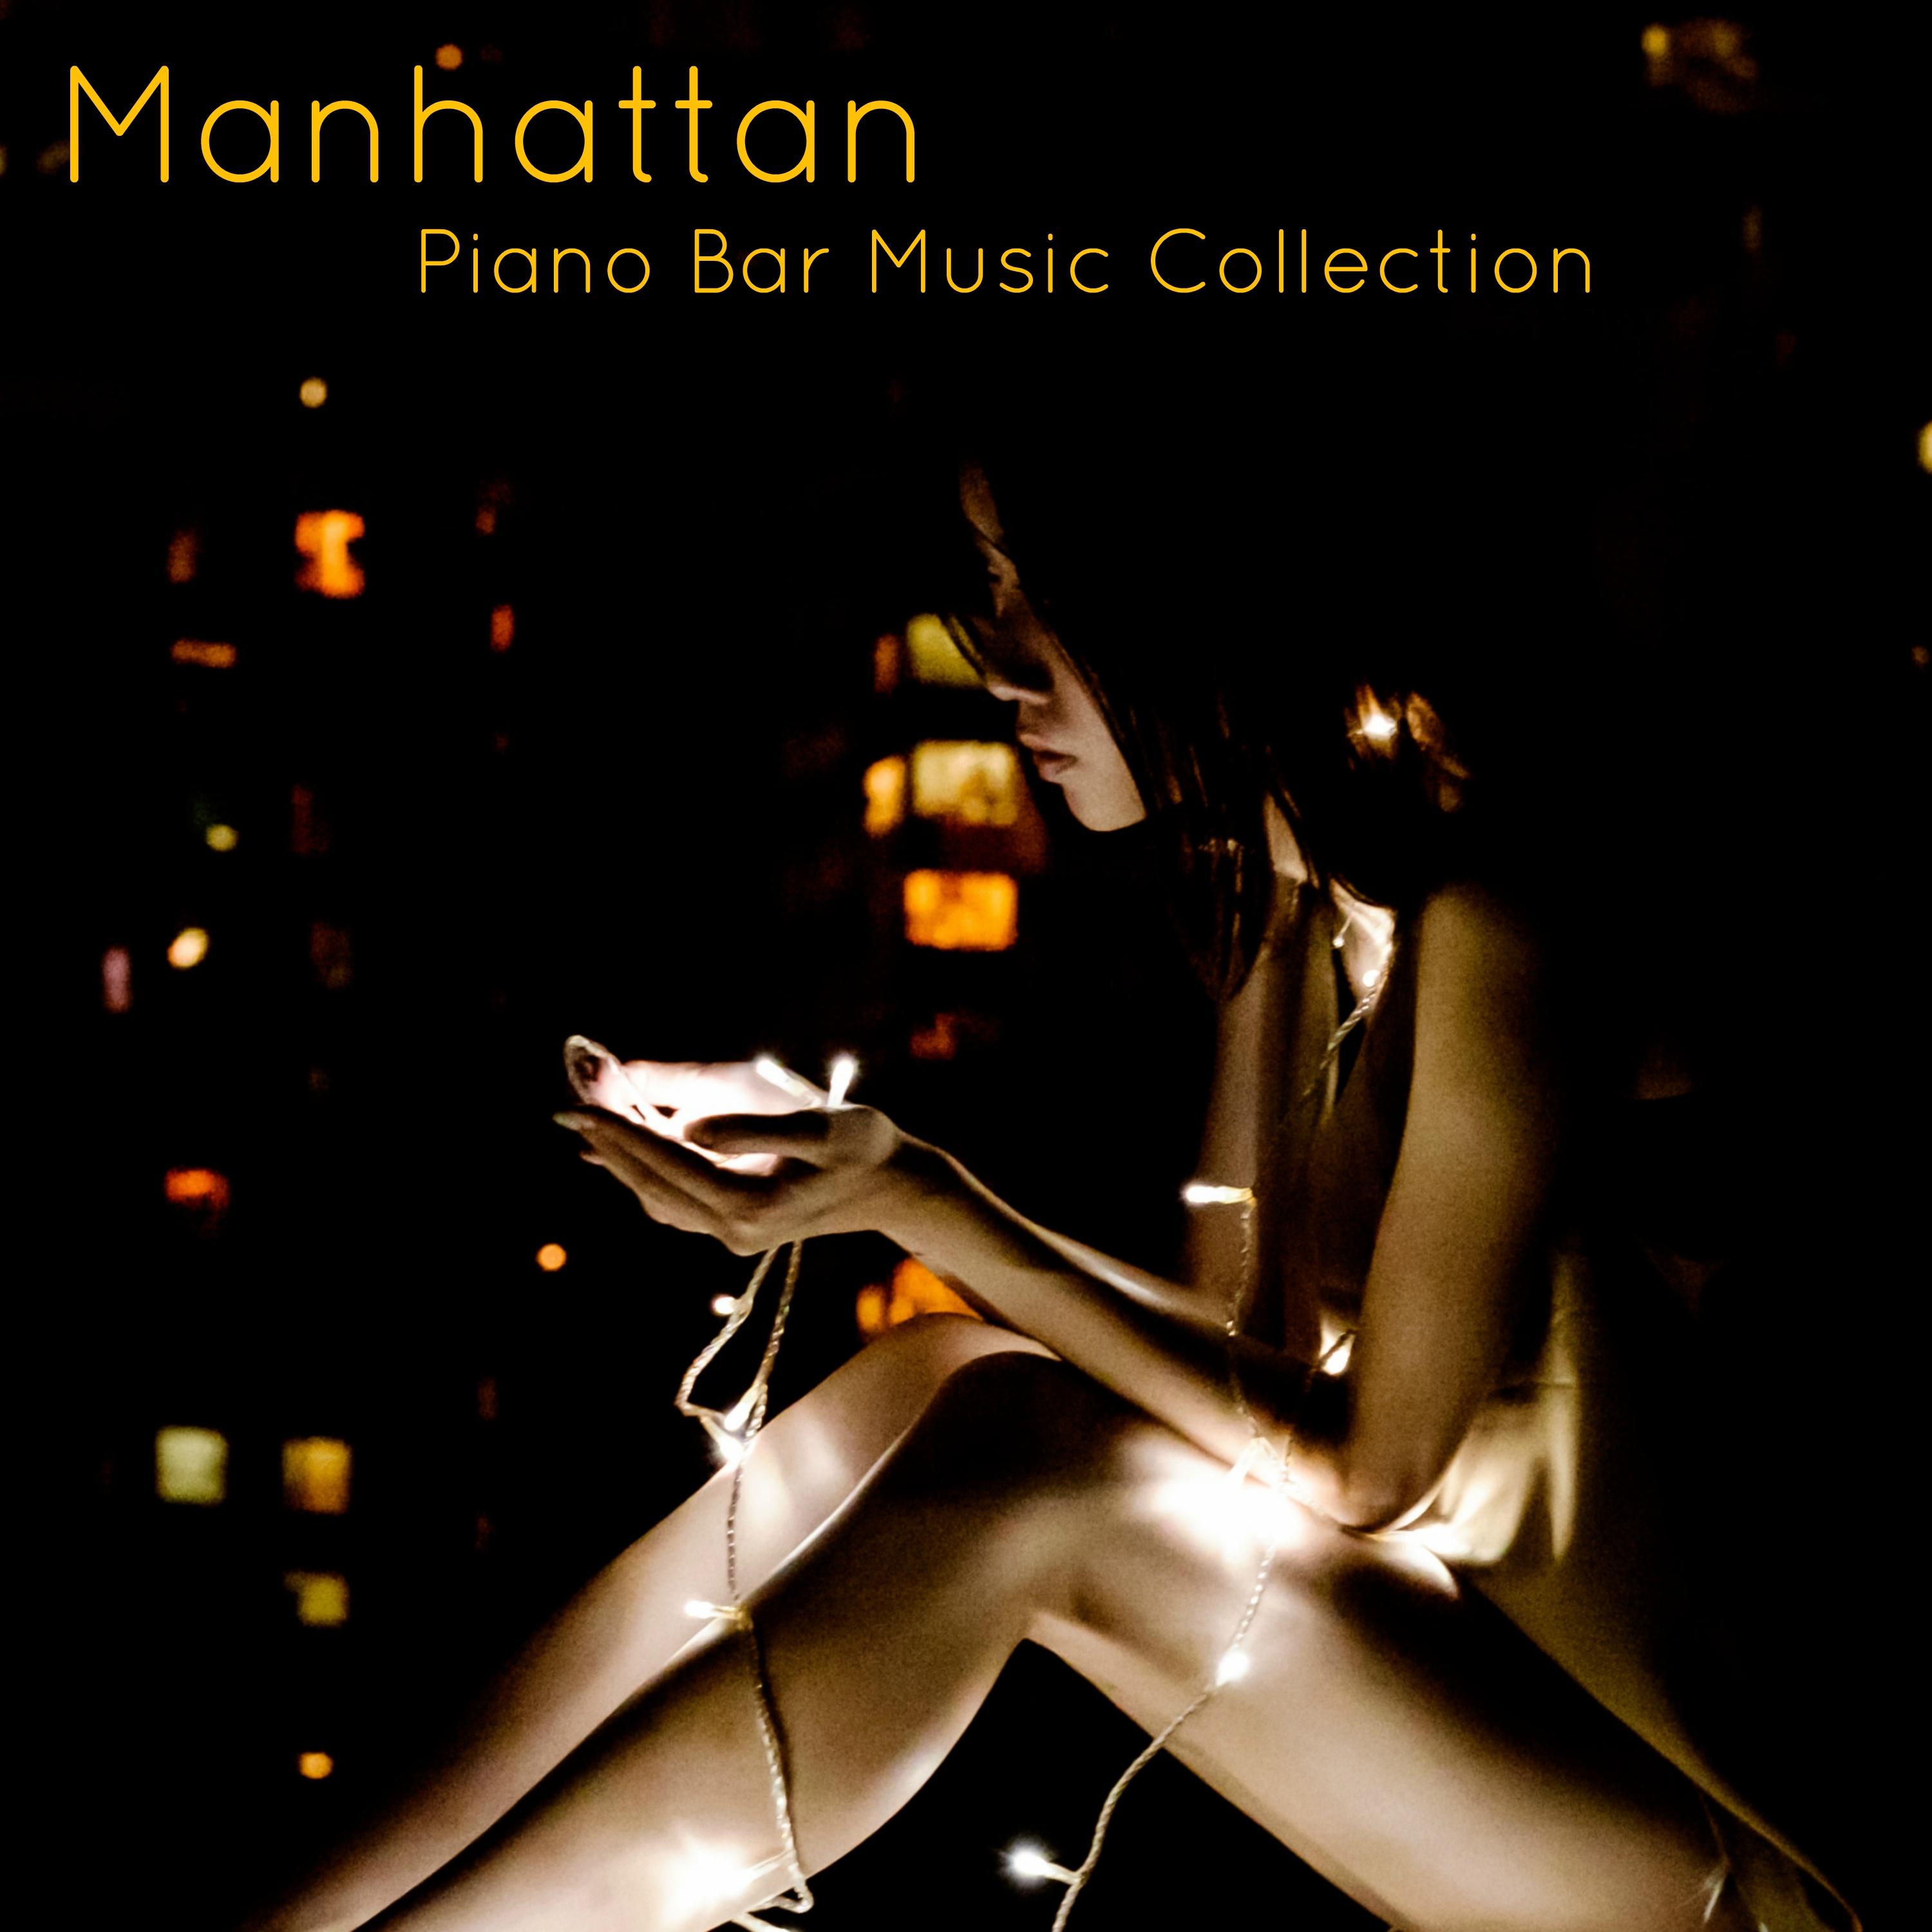 Manhattan Piano Bar Music Collection – New York Downtown Night Club ****** Healing Instrumental Piano Music Selection